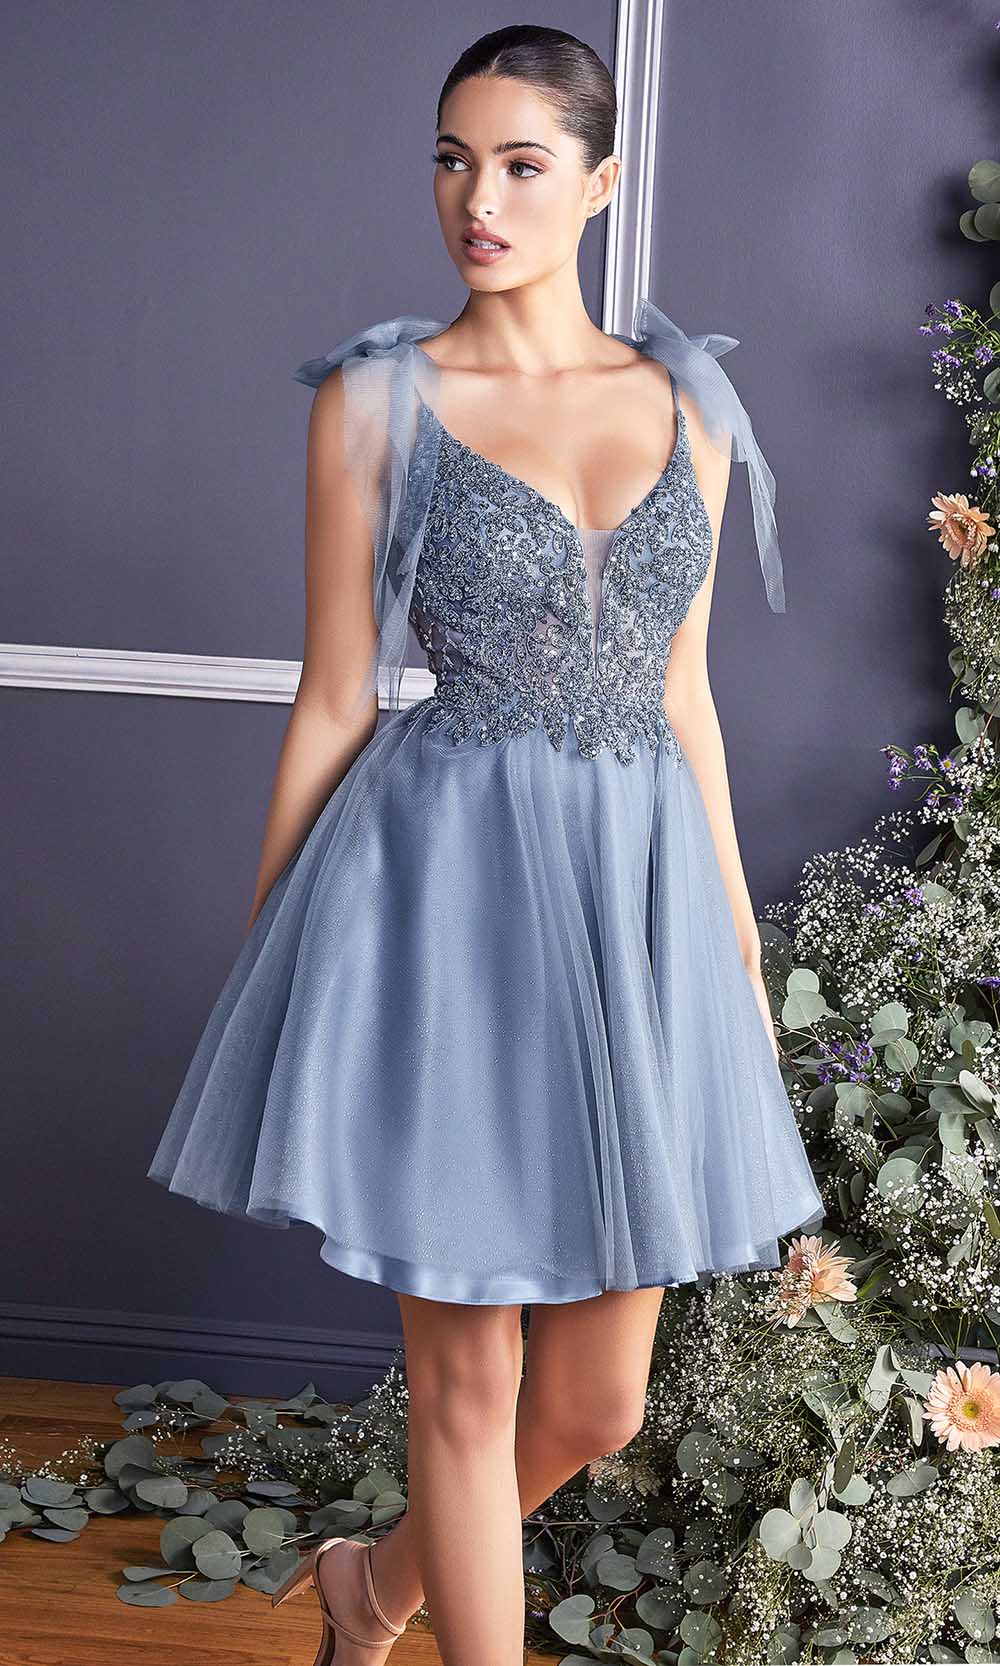 Ladivine - CD0174 Bow Accented Beaded A-Line Dress In Bluegrade 8 grad dresses, graduation dresses